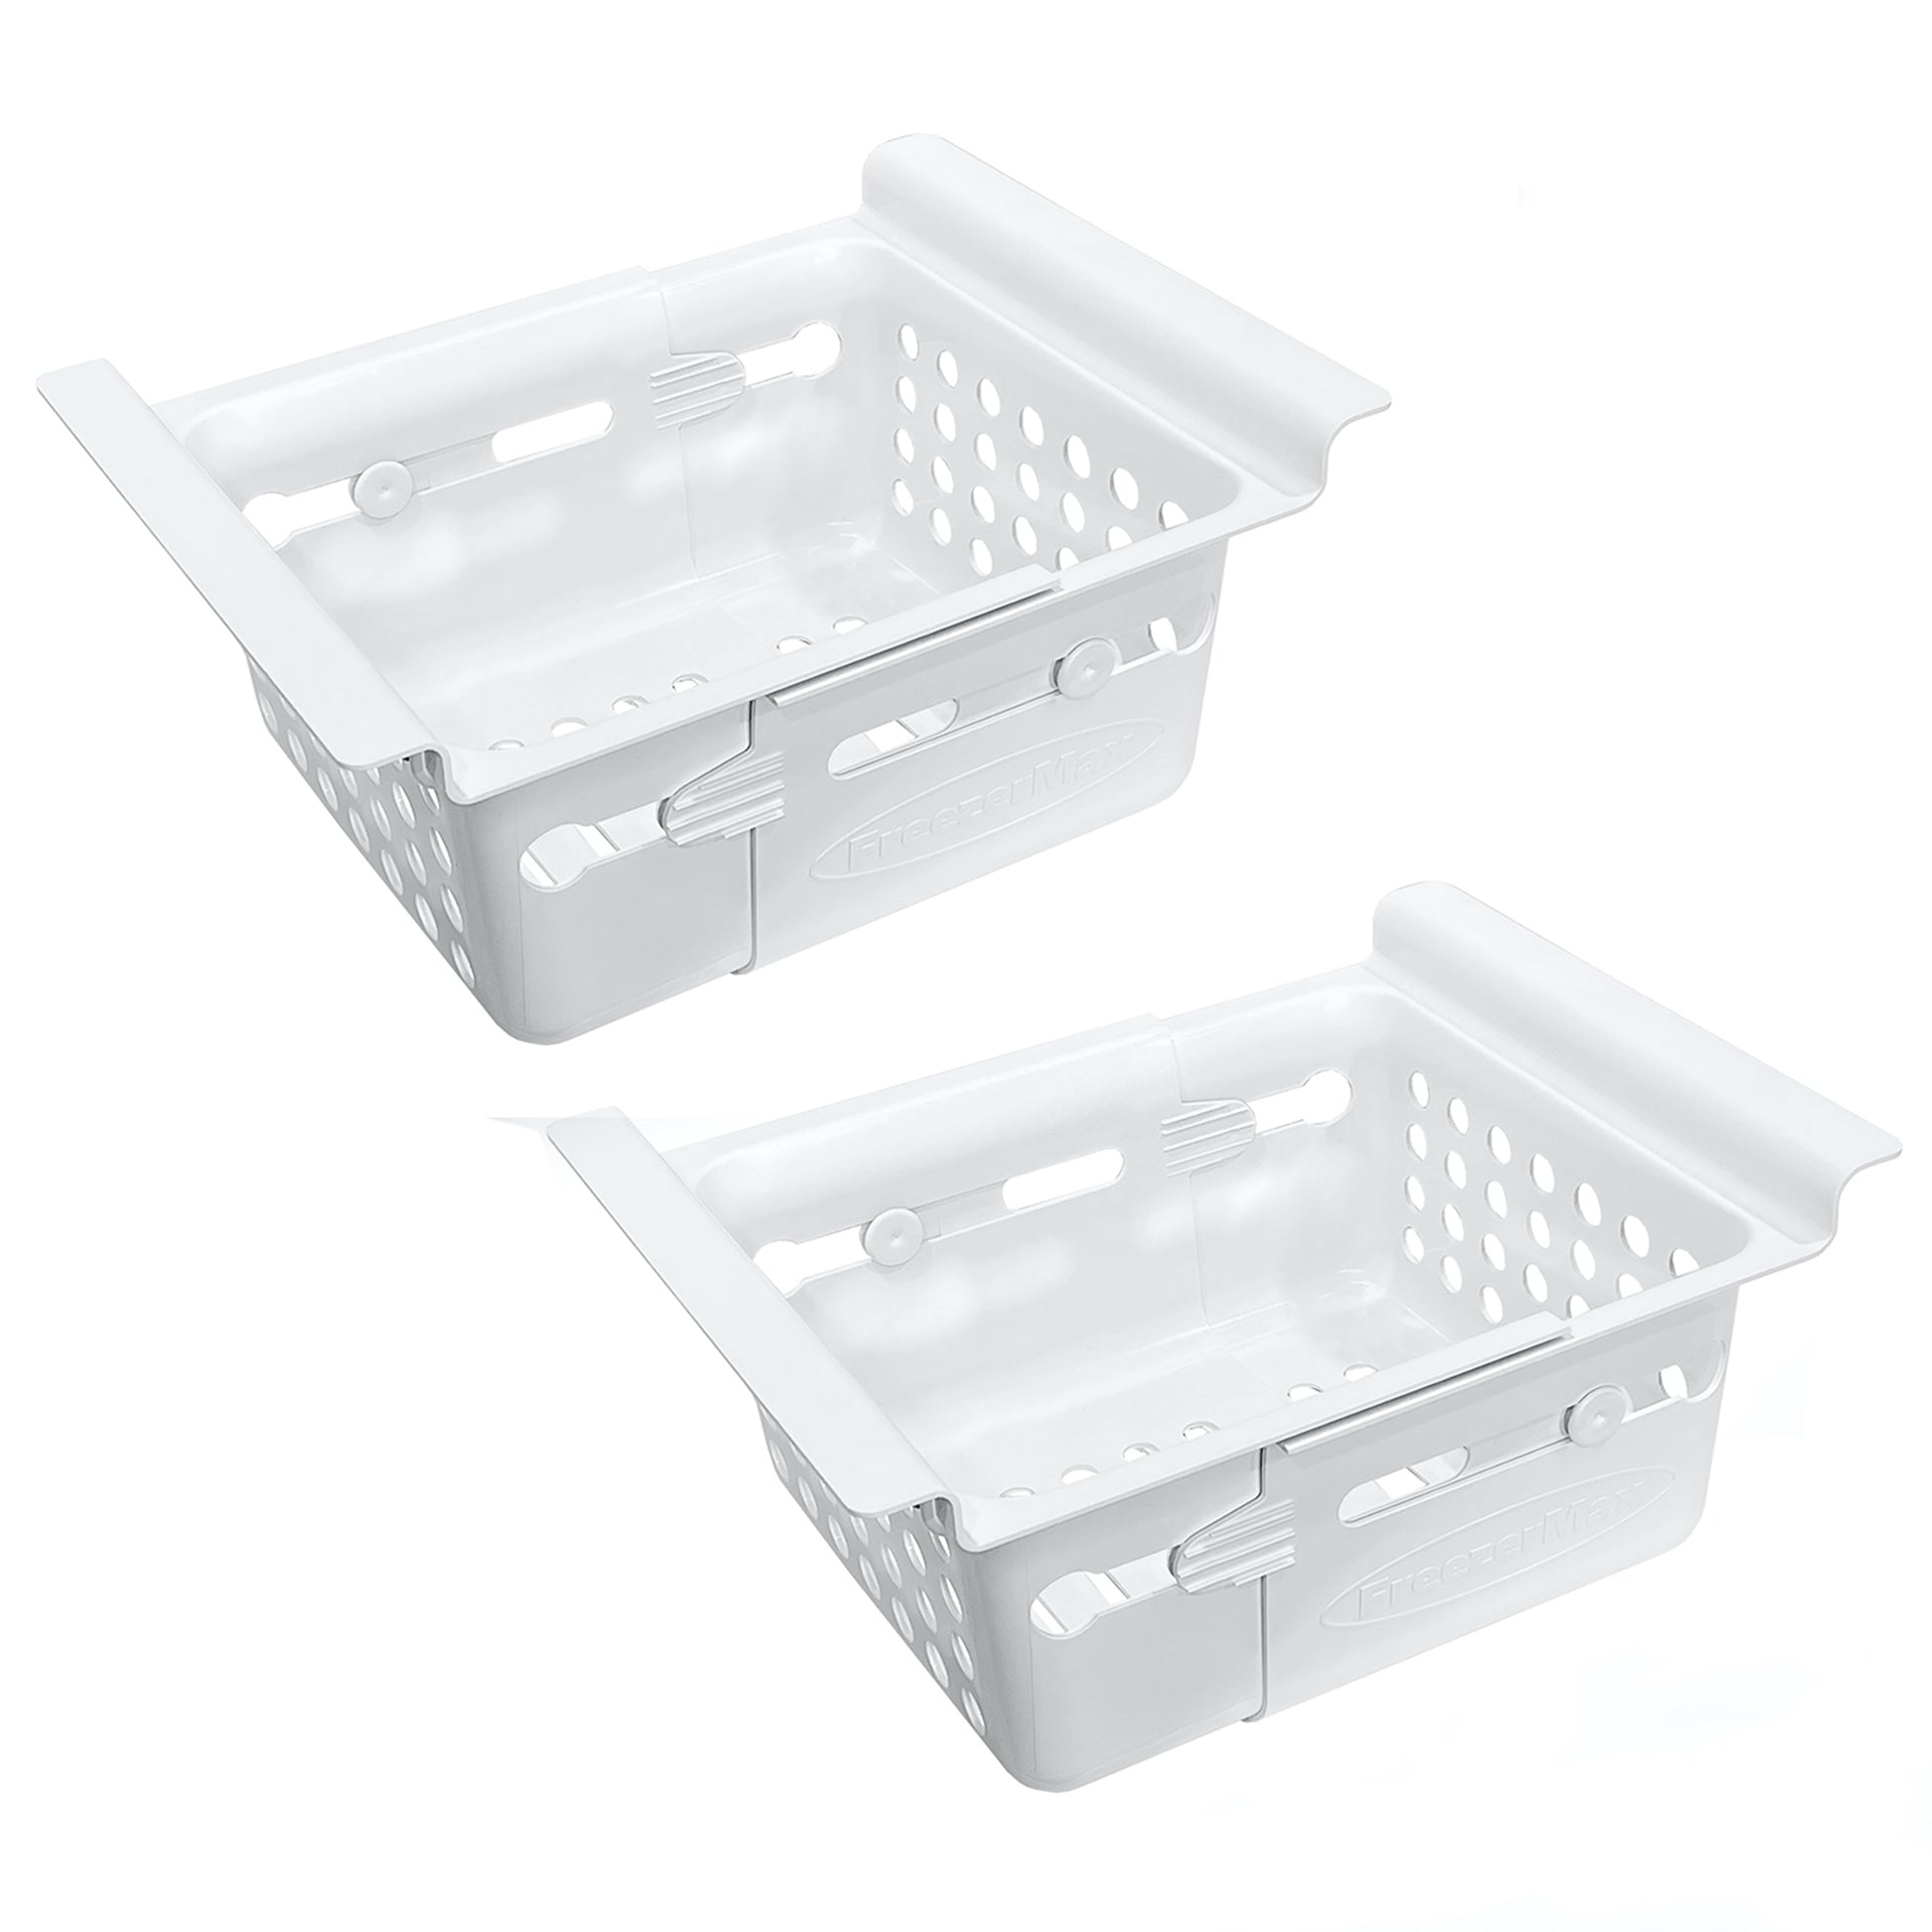 2 Freezermax Baskets - Freezer Organization Bins